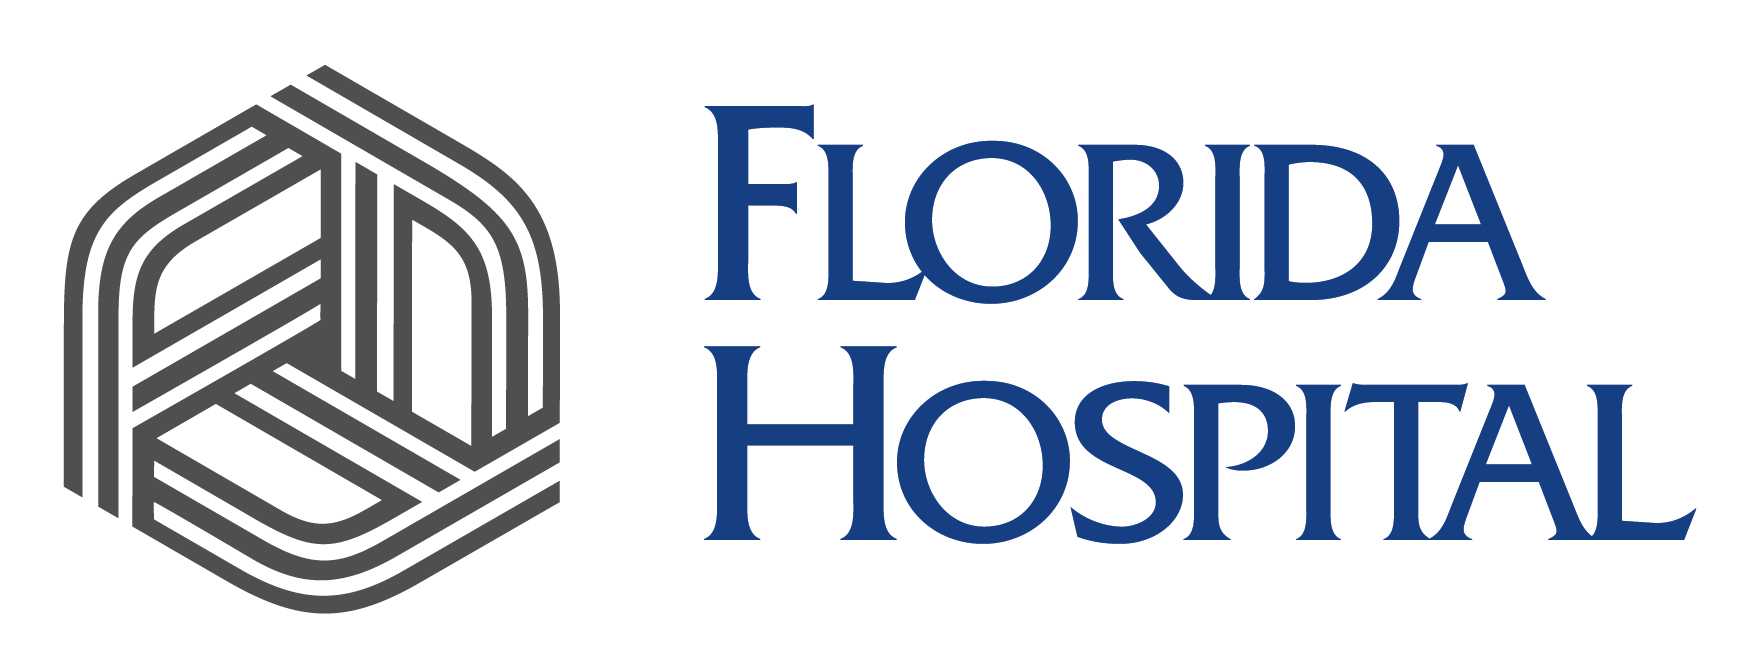 FLorida-Hospital-Logo